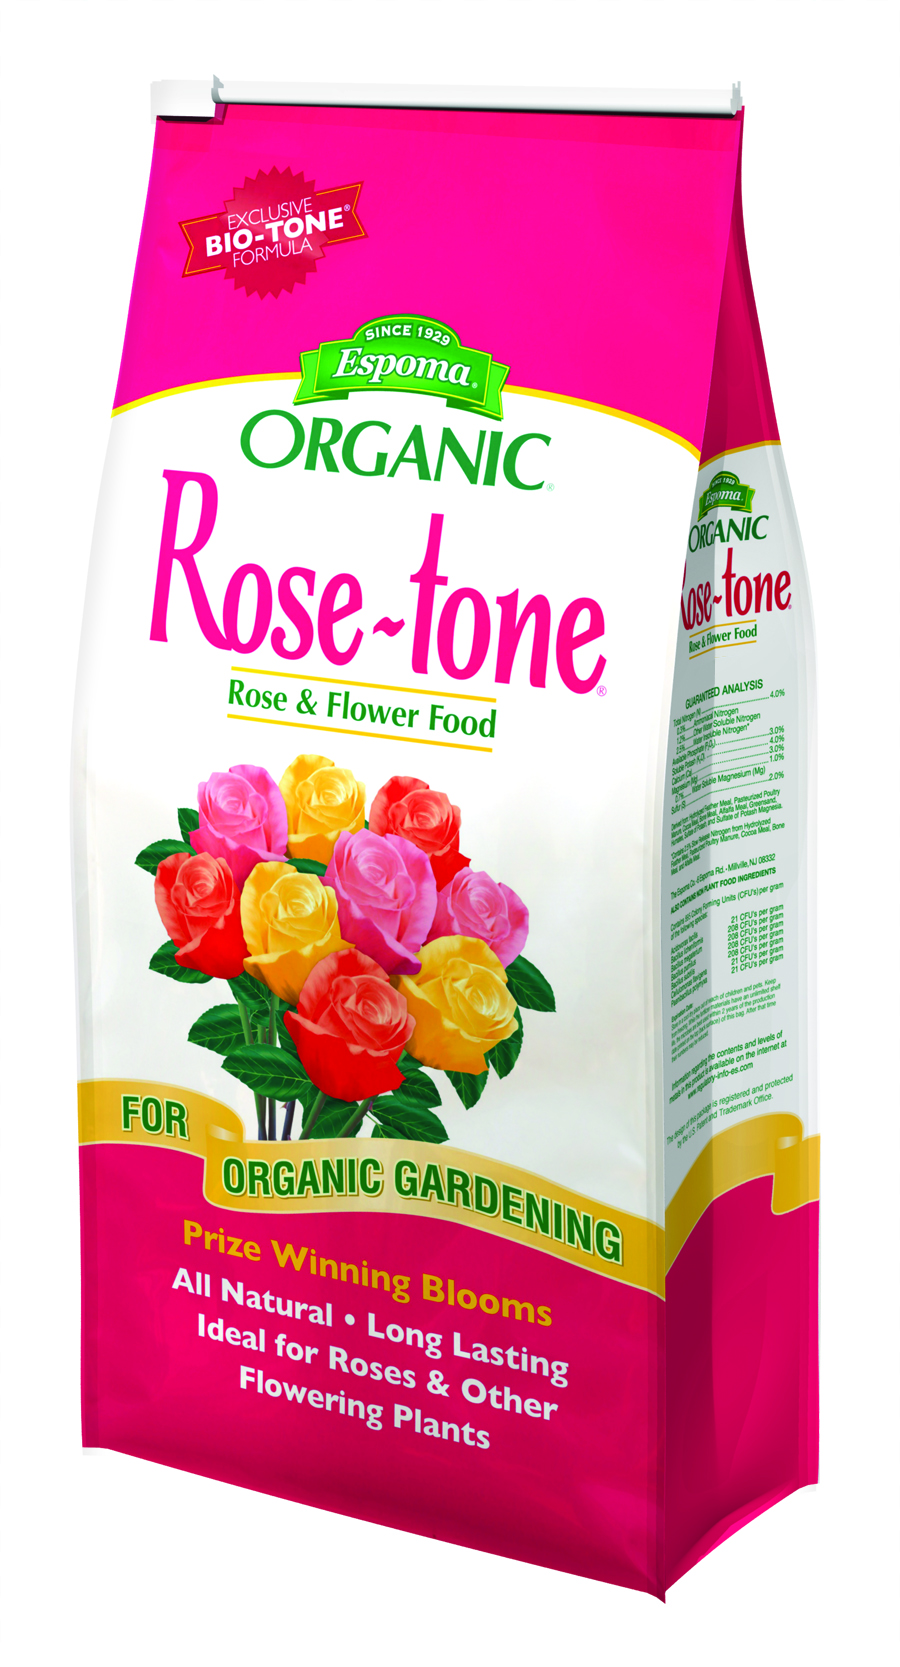 Bag of Rose-tone Fertilizer